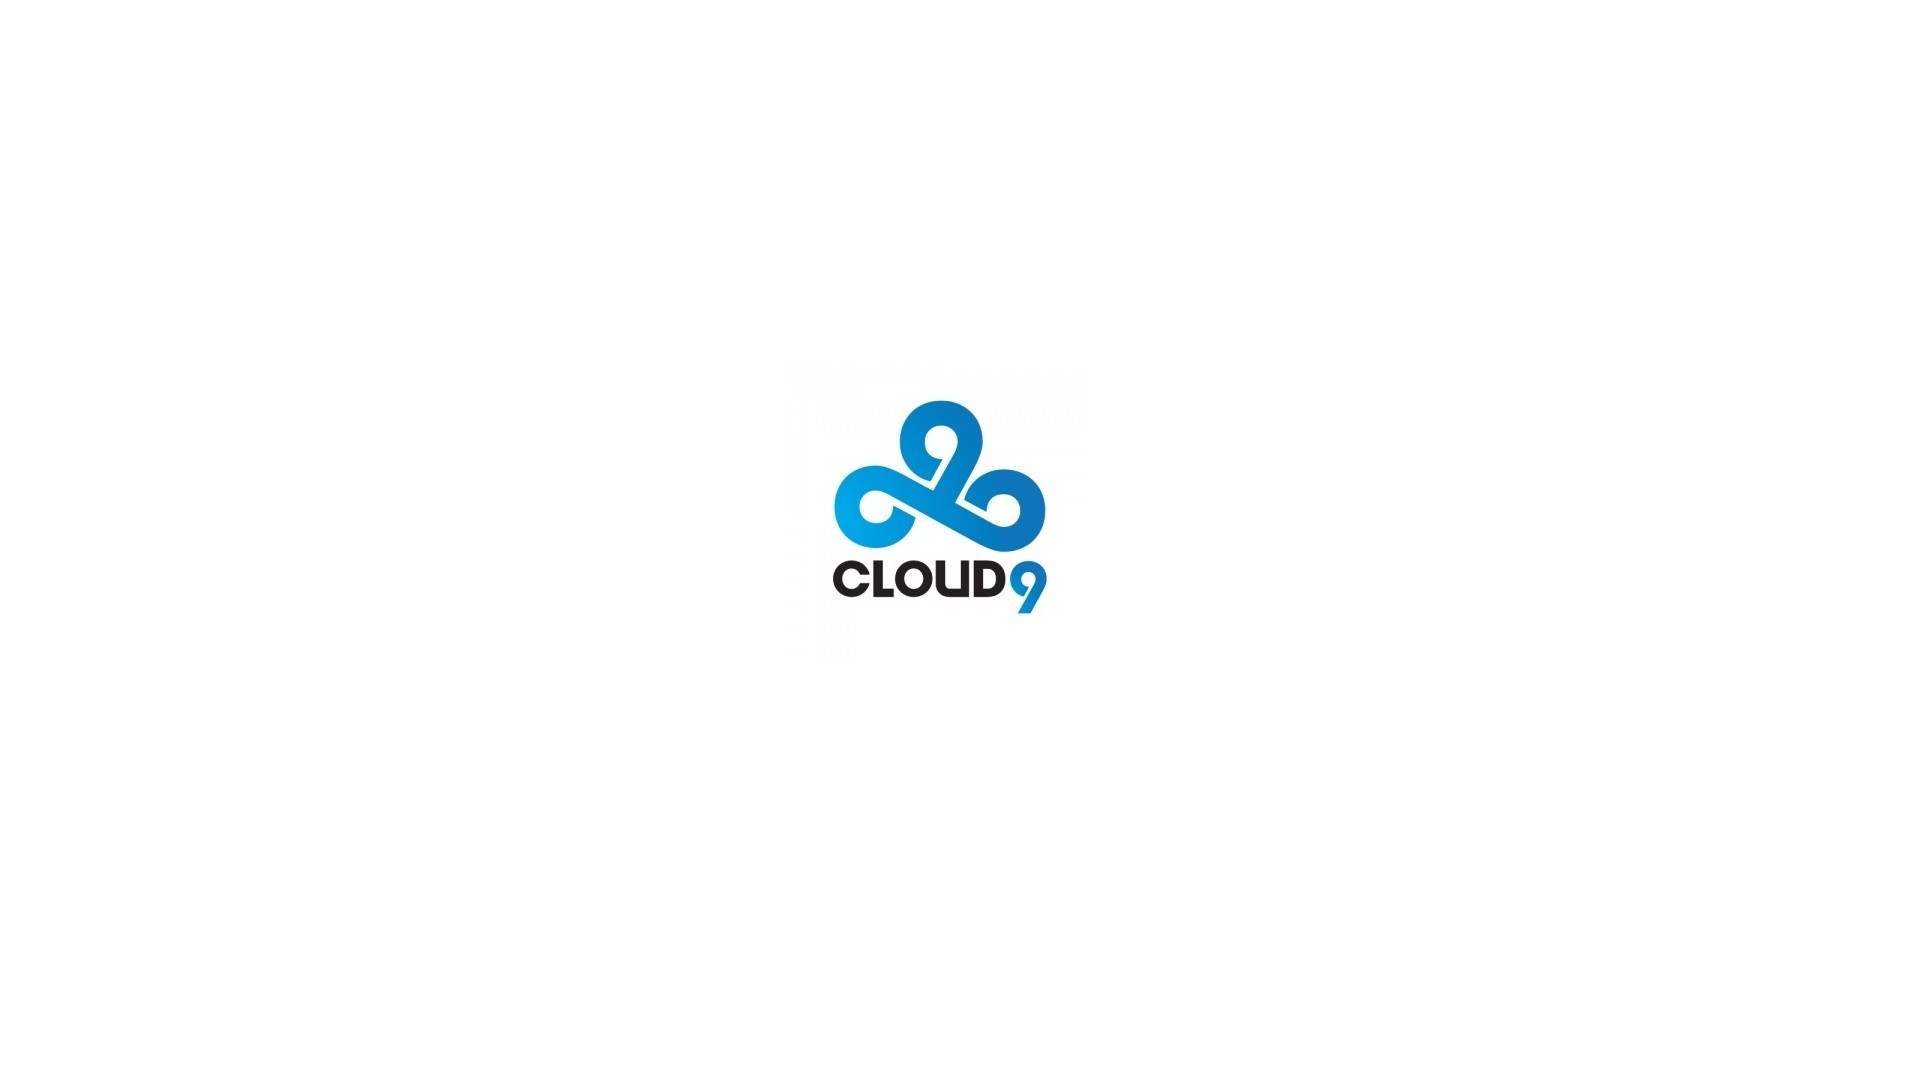 Cloud 9 Desktop Background